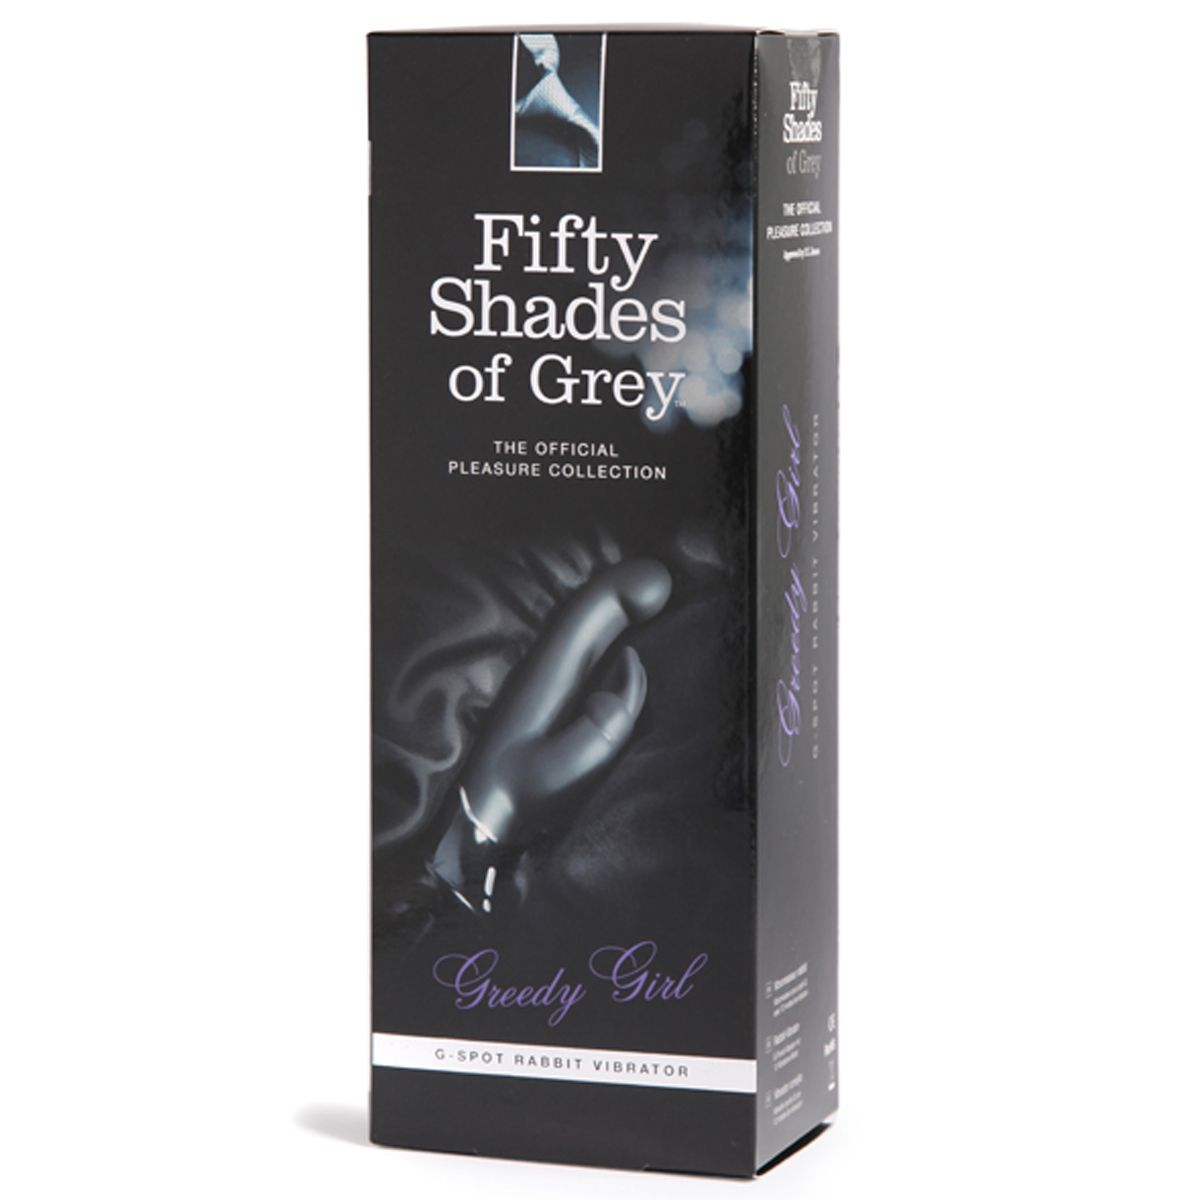 Zwart FIFTY OF Shades GREY Girl Fifty - rabbit-vibratoren Rabbit - SHADES Greedy Vibrator of Grey G-Spot